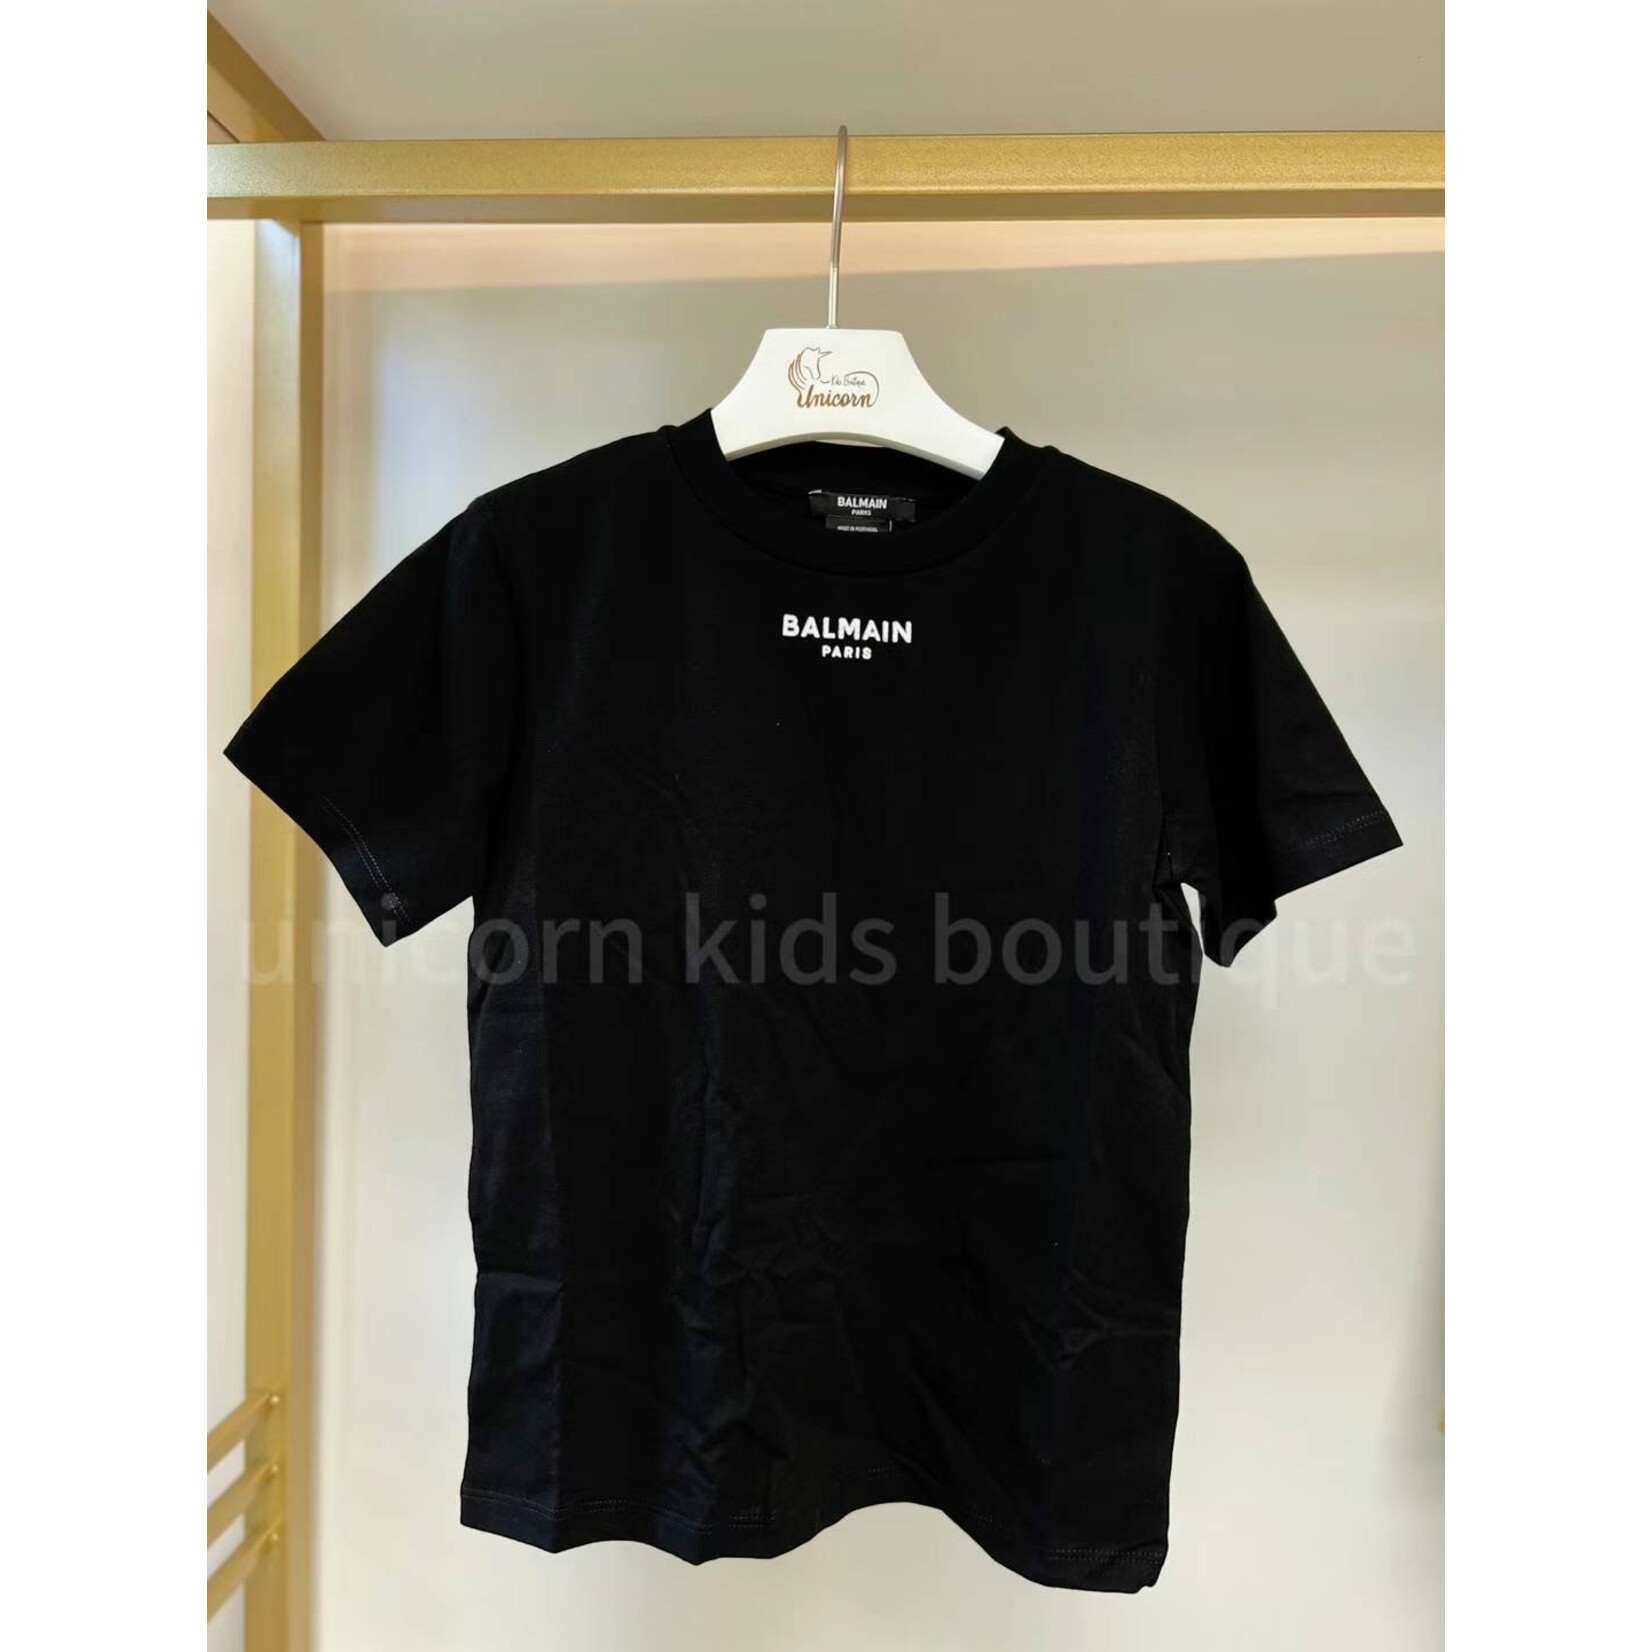 Balmain Balmain Embroidery Logo Kids T-Shirt